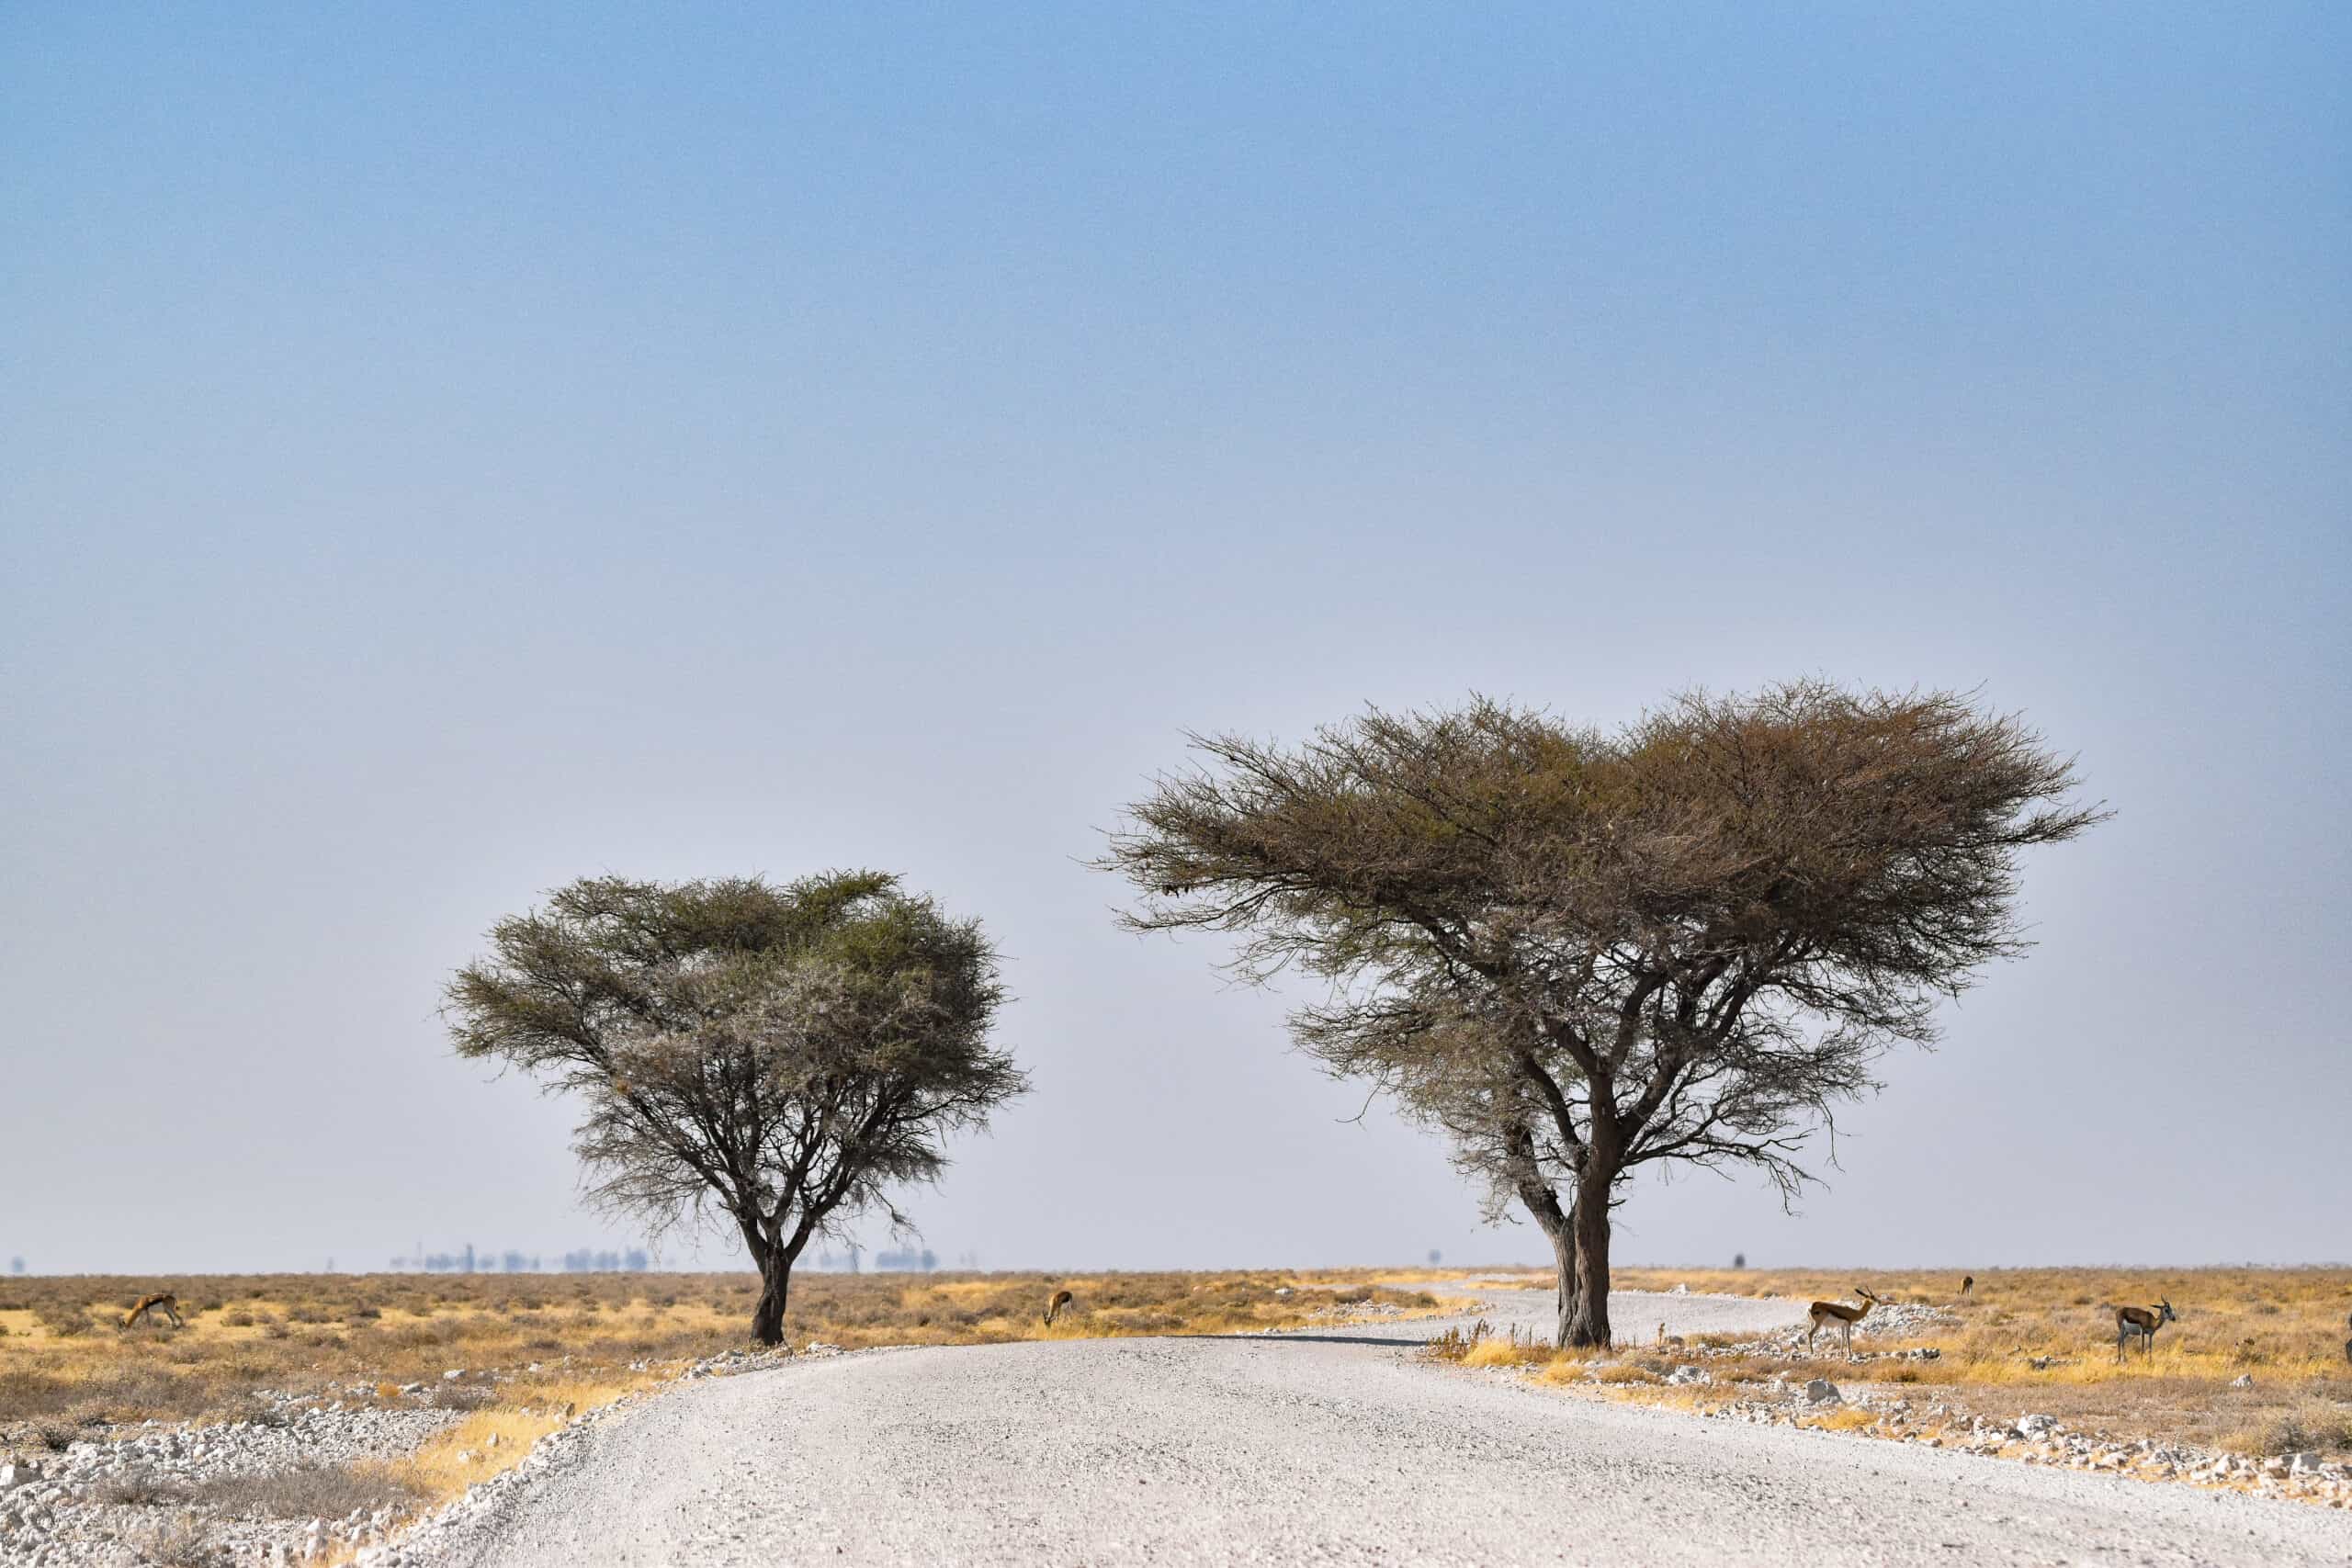 Two-week Namibia self-drive road trip itinerary